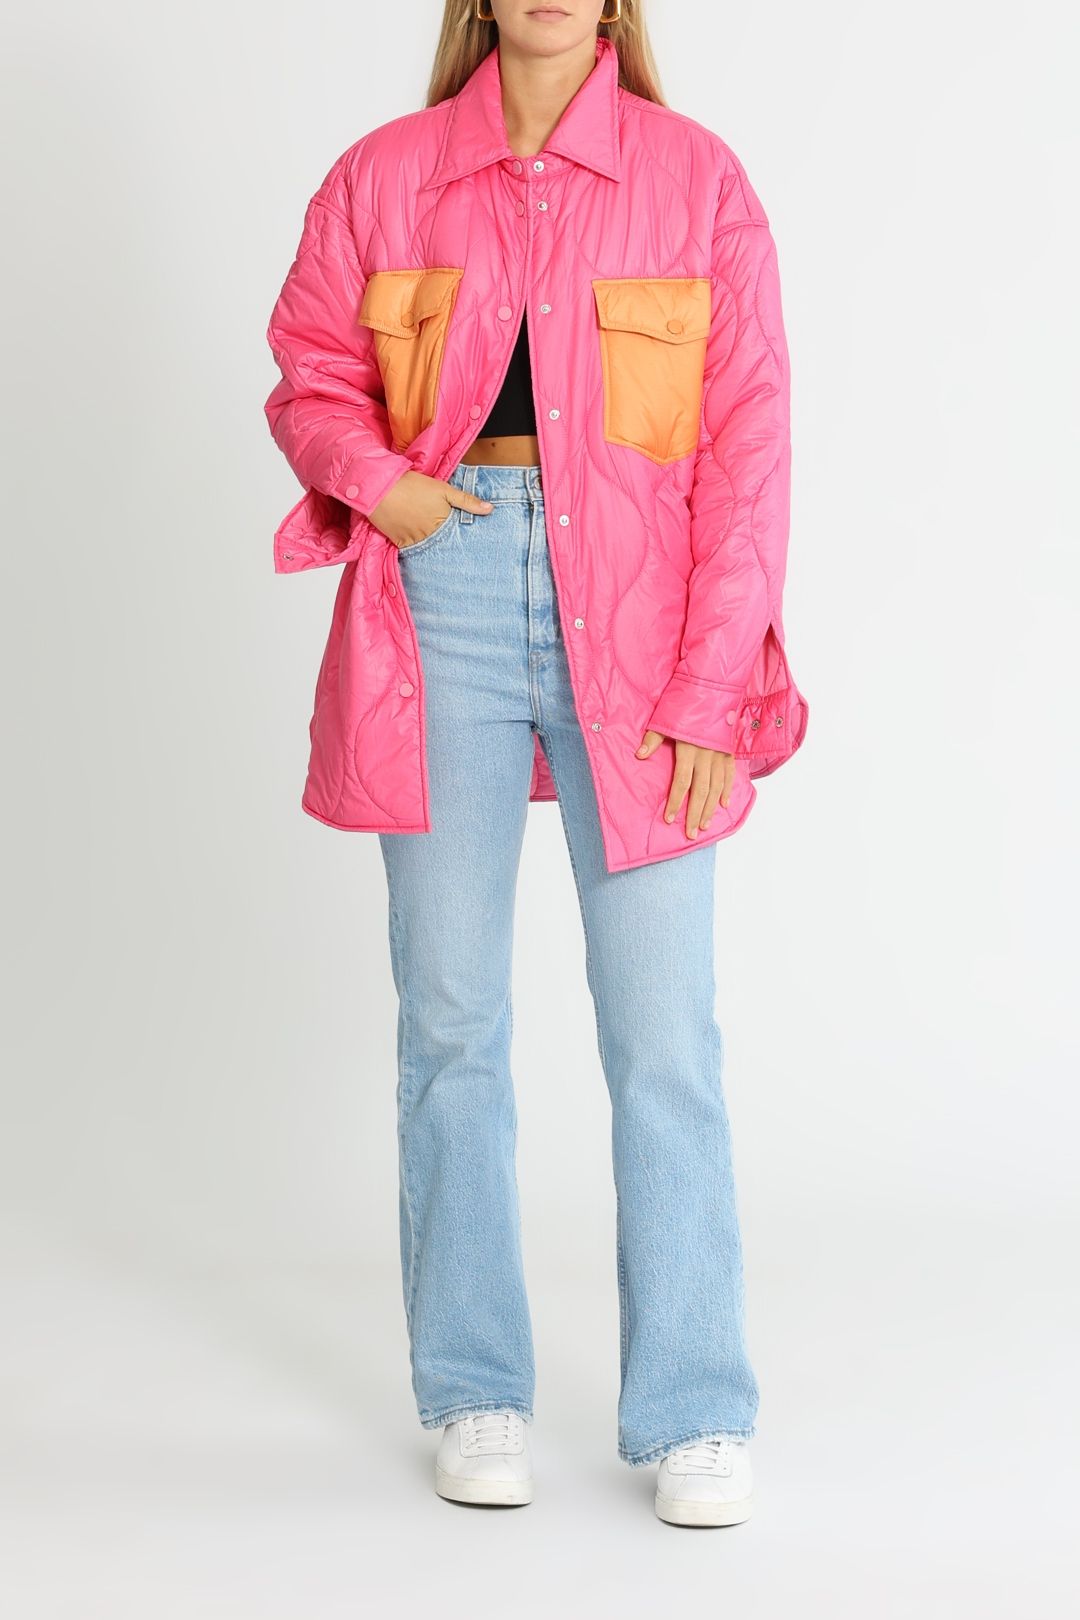 Blanca Buckley Jacket Orange Pink Collared